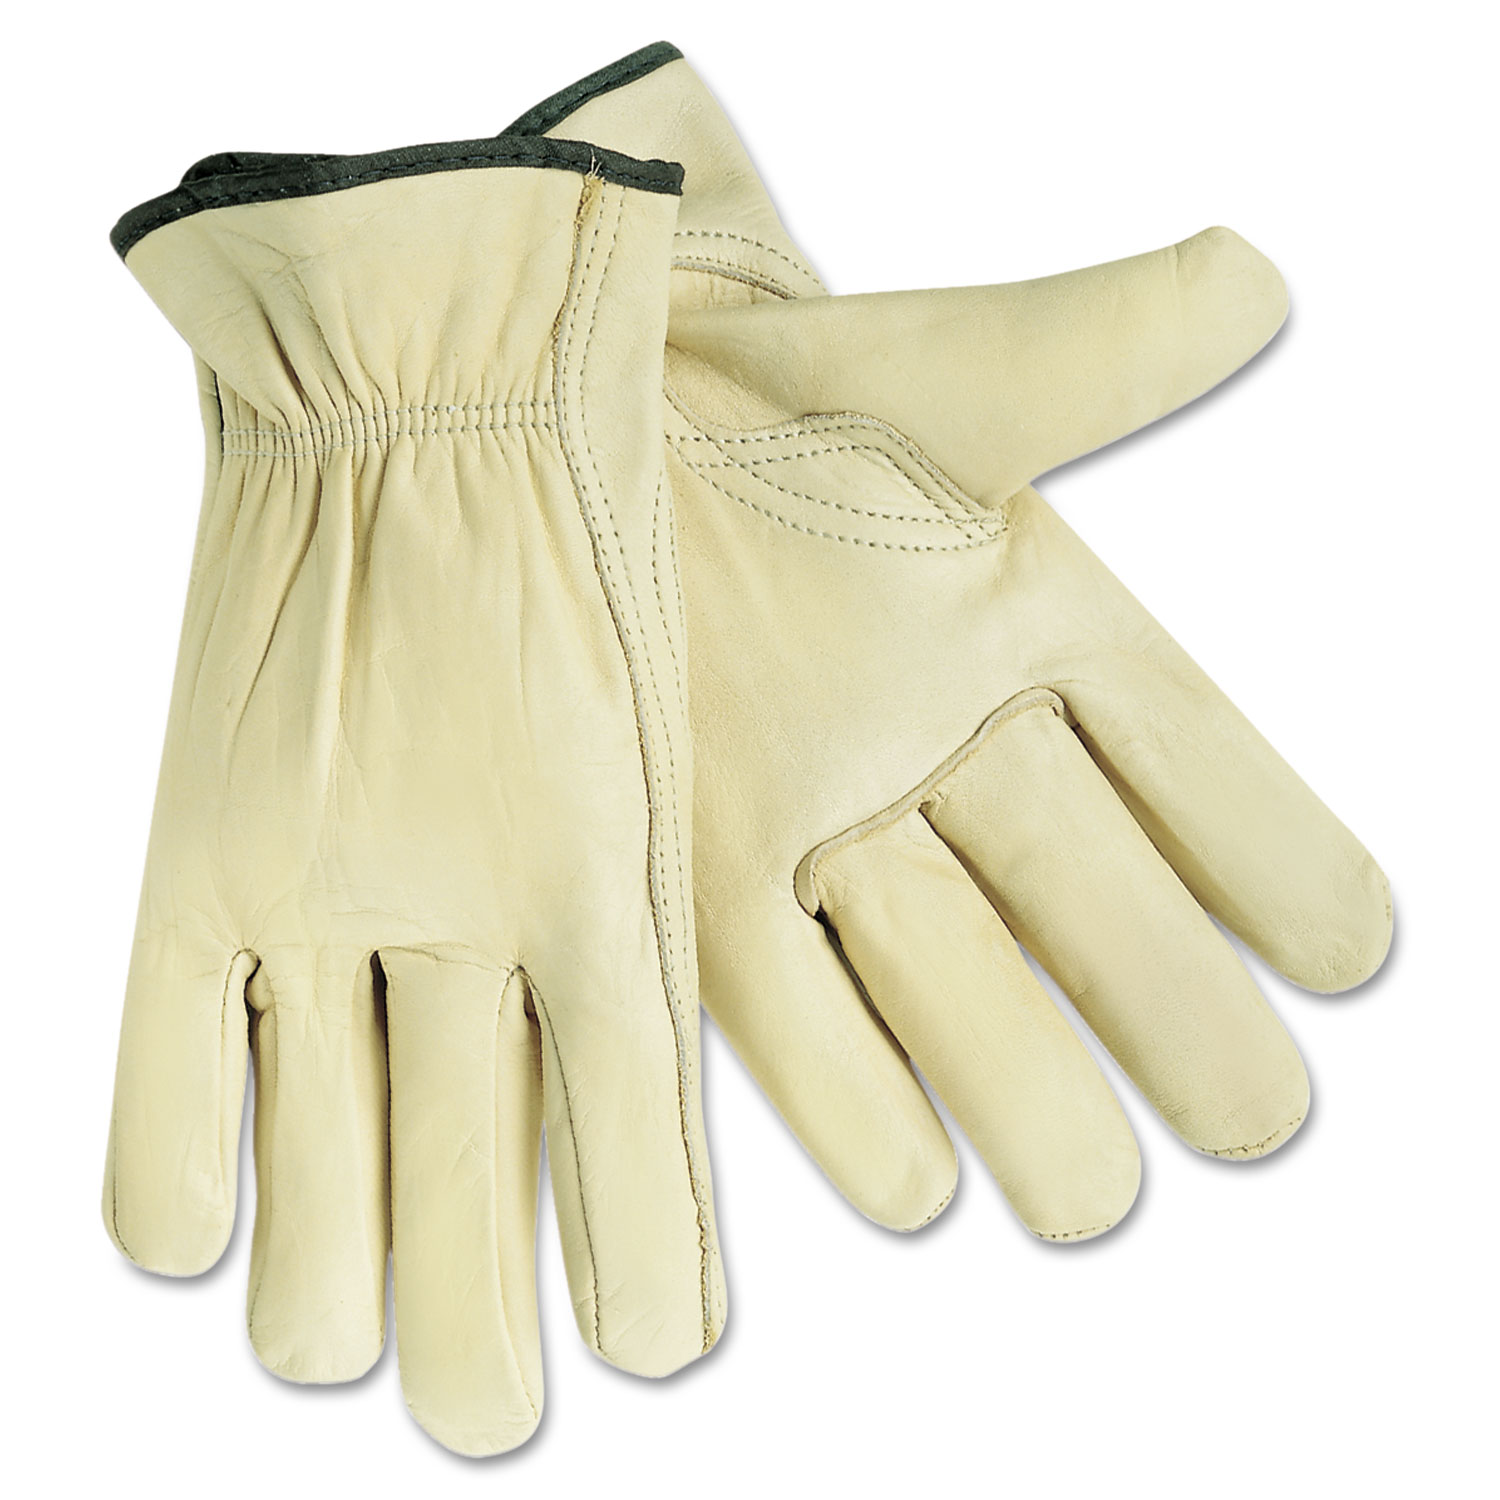  MCR Safety 3211XL Full Leather Cow Grain Gloves, X-Large, 1 Pair (CRW3211XL) 